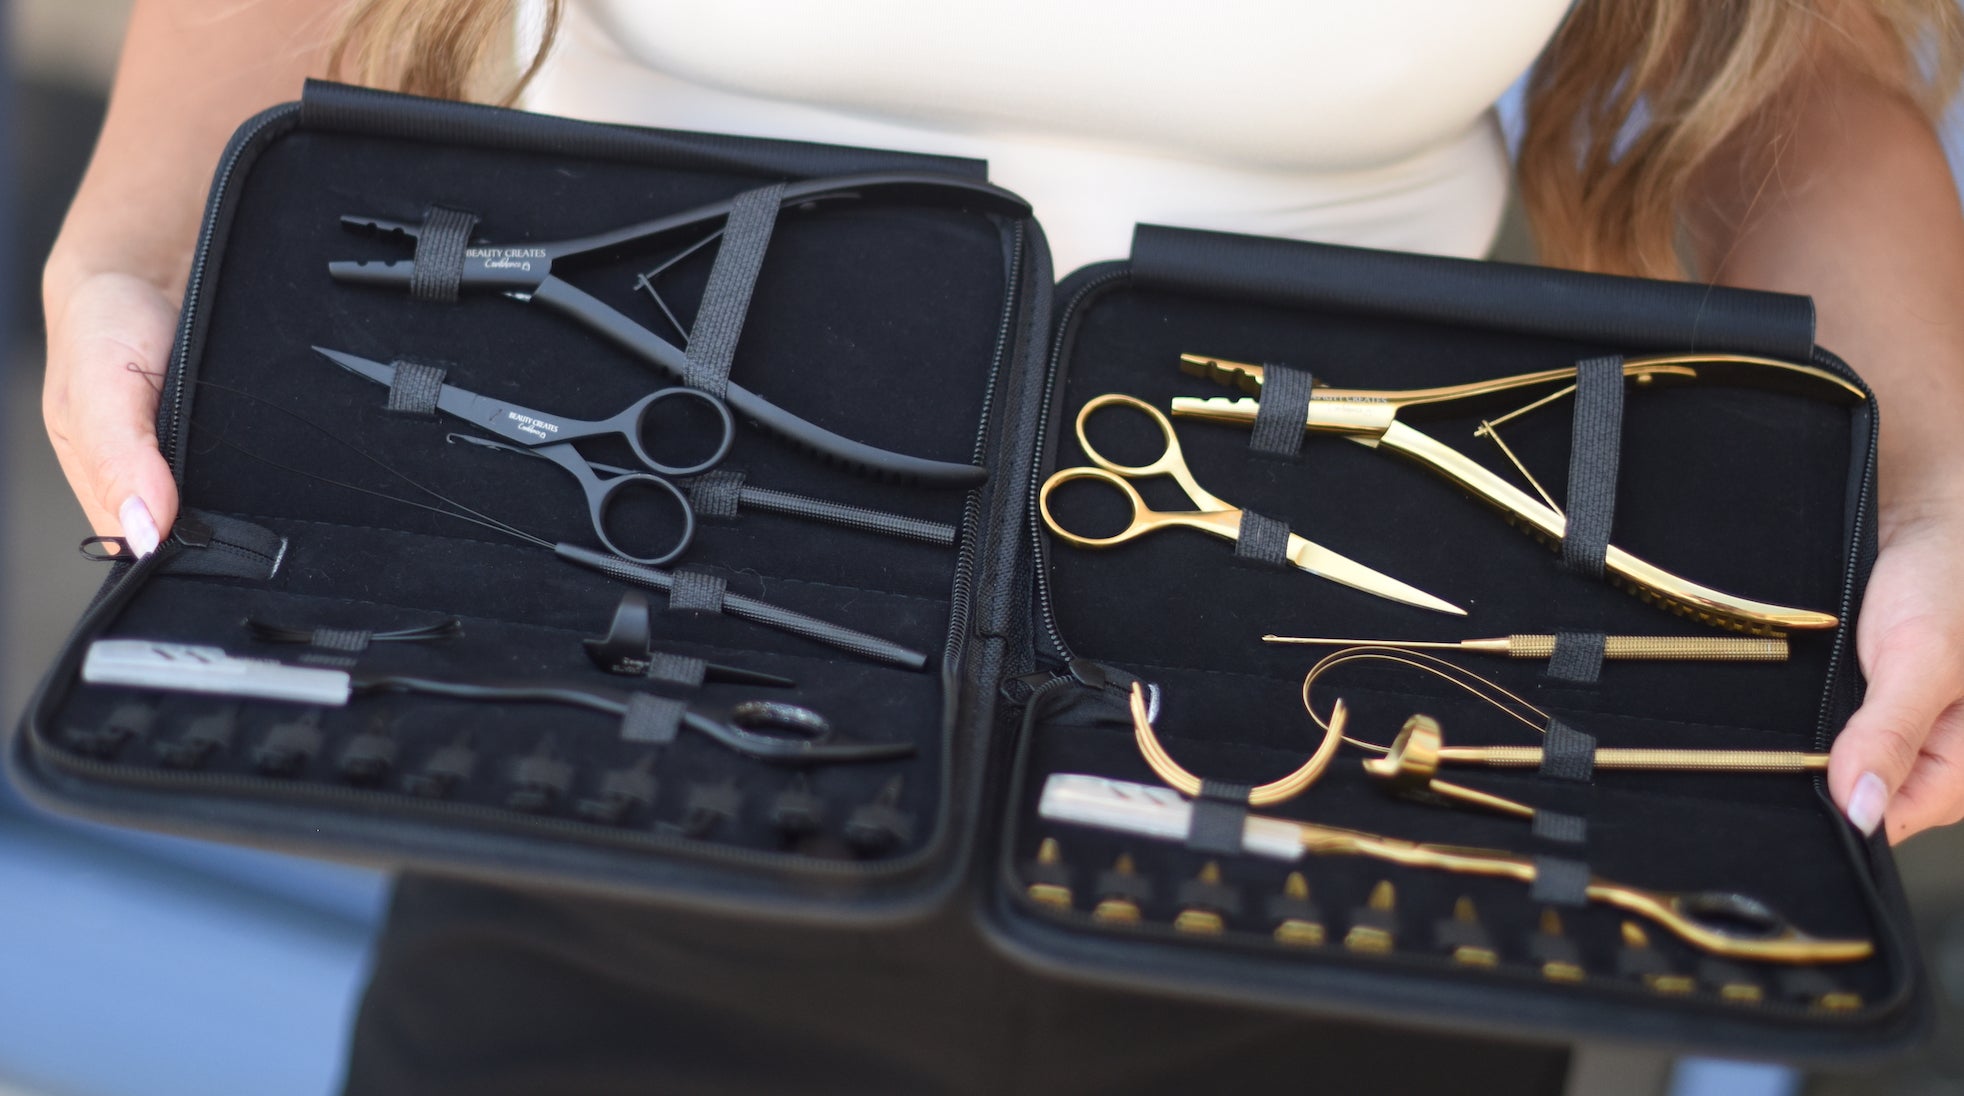 Hair Extensions Plier & Tool kits